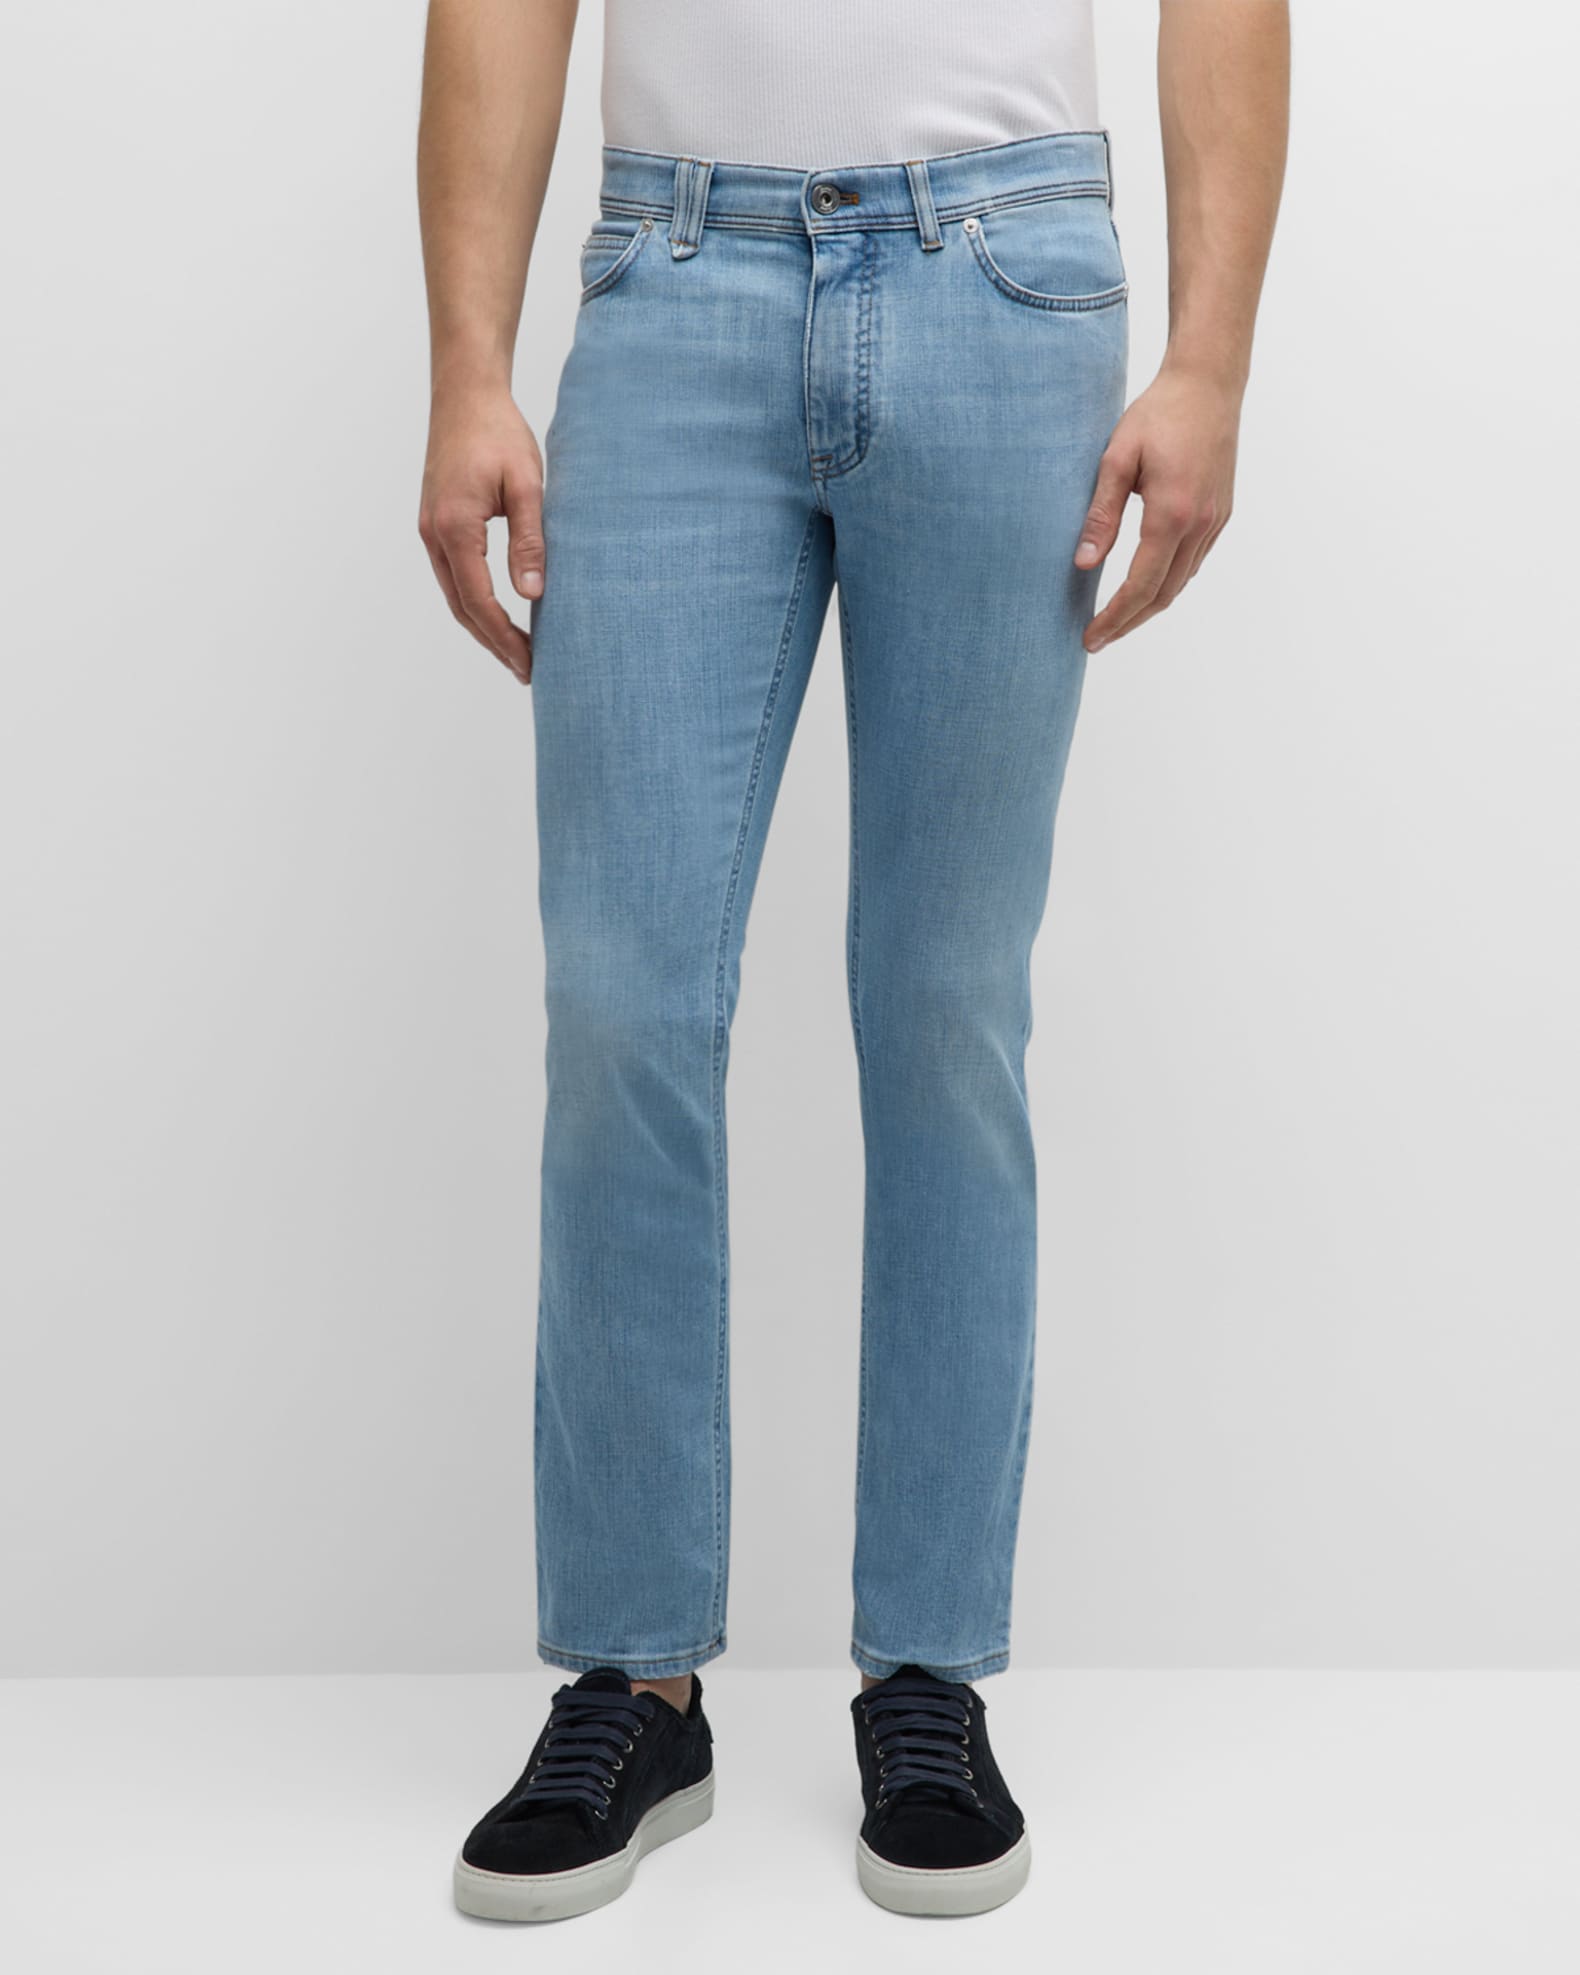 Brioni Men's Slim-Fit Light Wash Denim Jeans